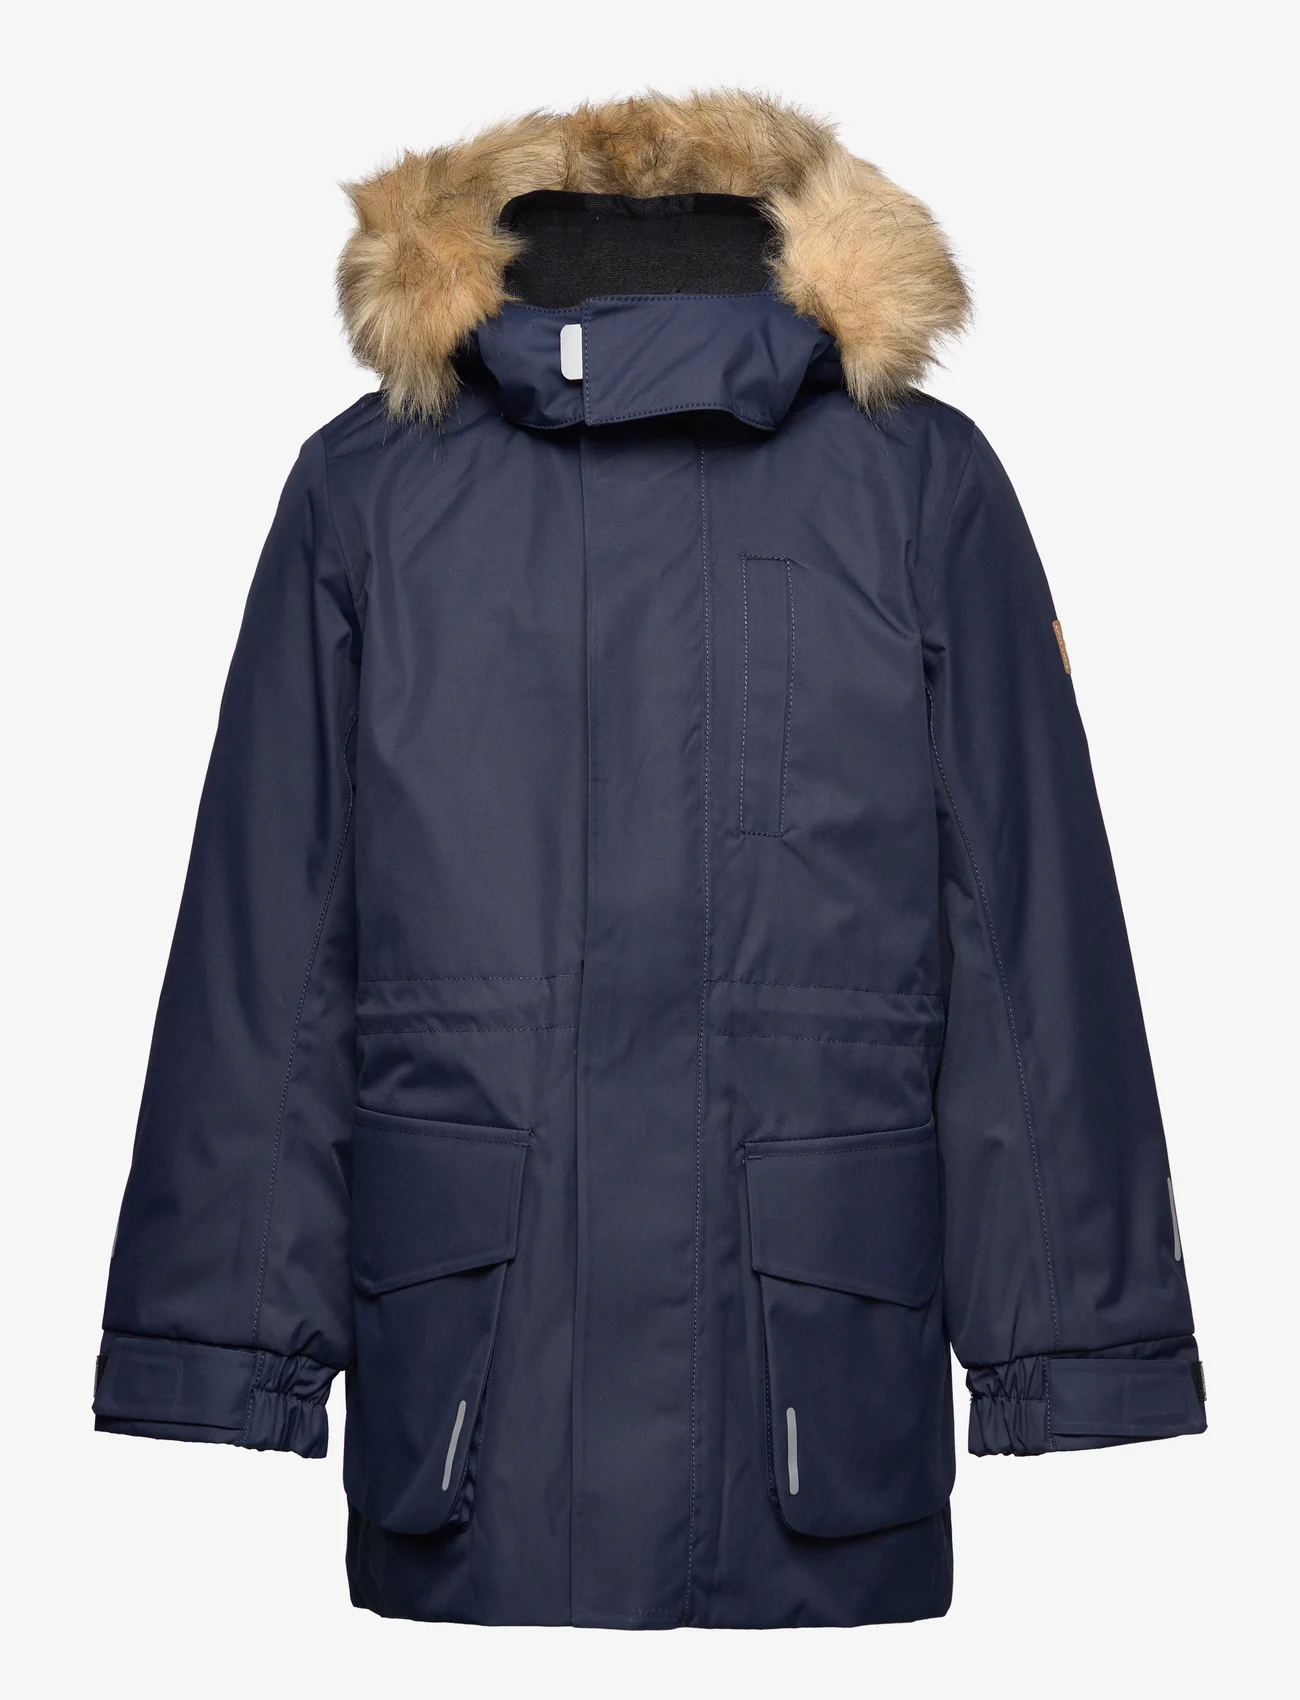 Reima - Reimatec winter jacket, Naapuri - parkas - navy - 0